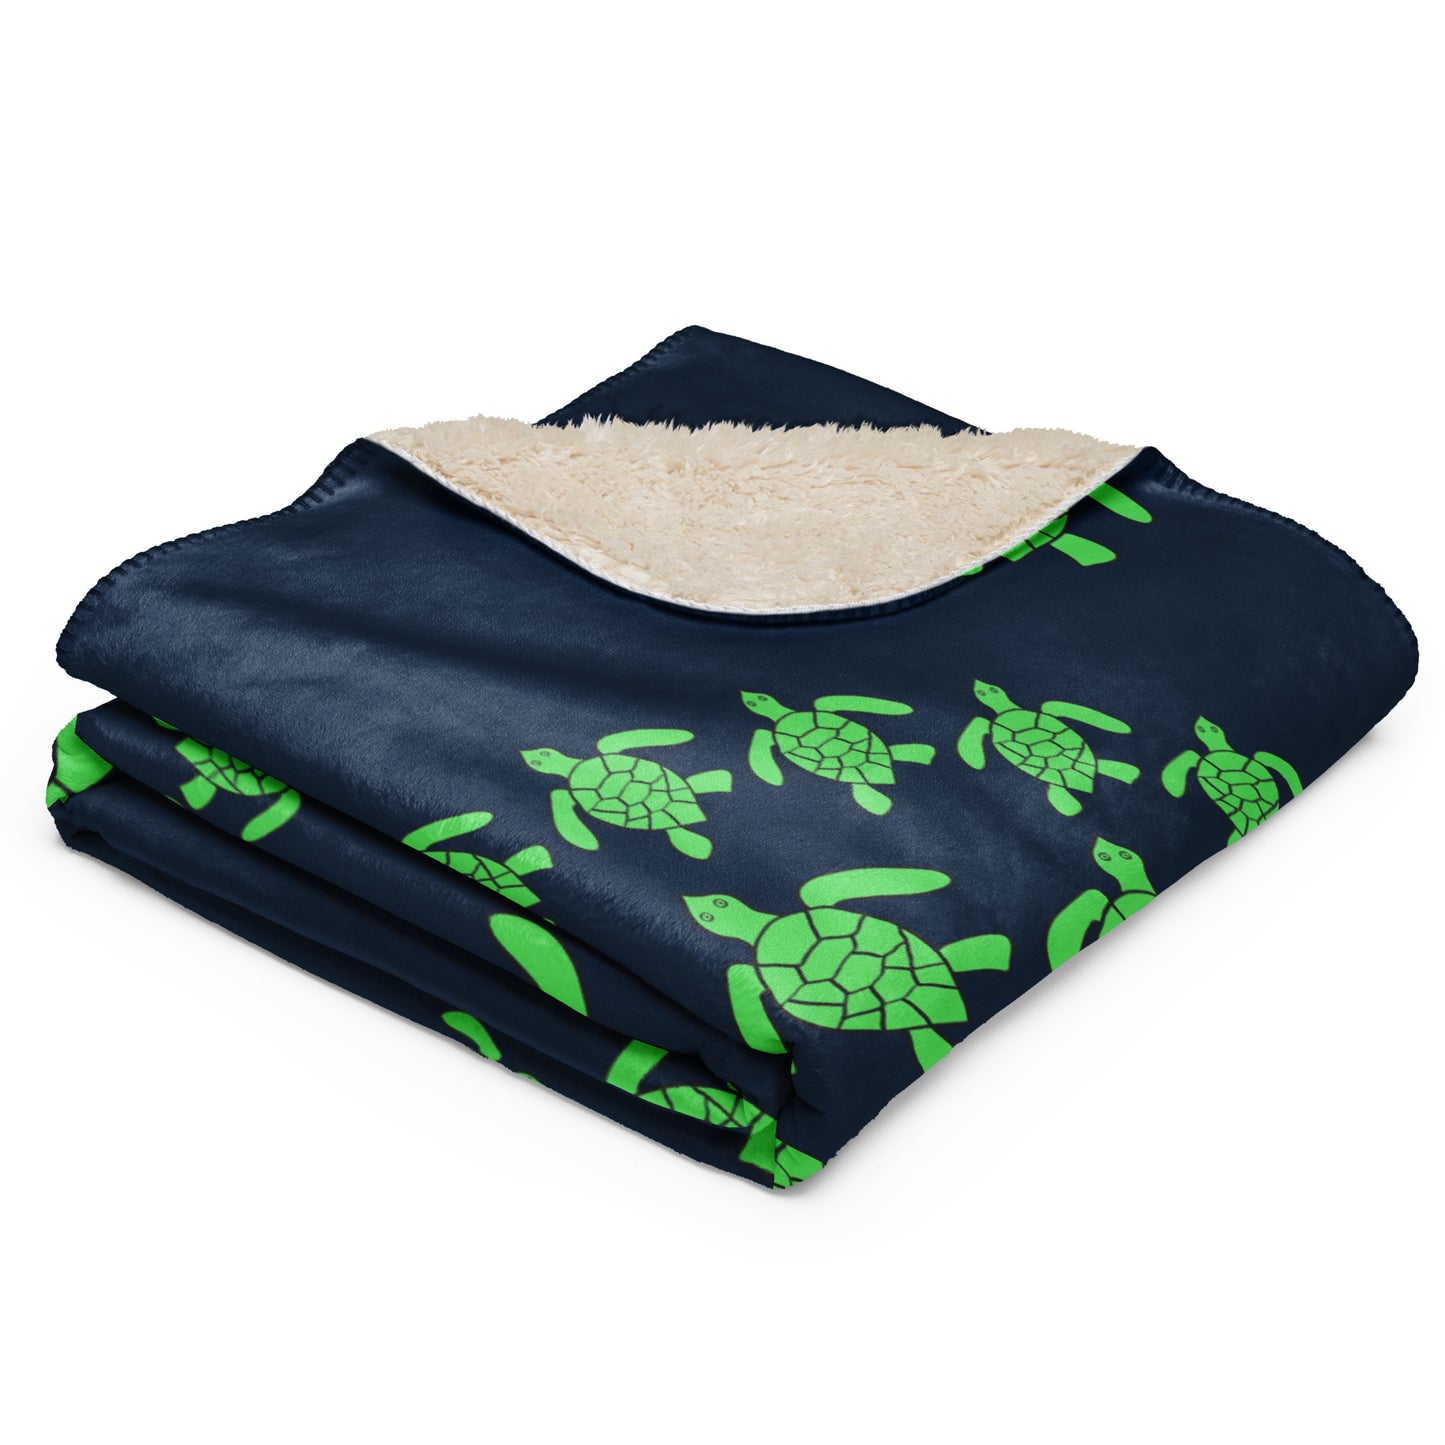 Turtle Sherpa blanket - Green on Navy